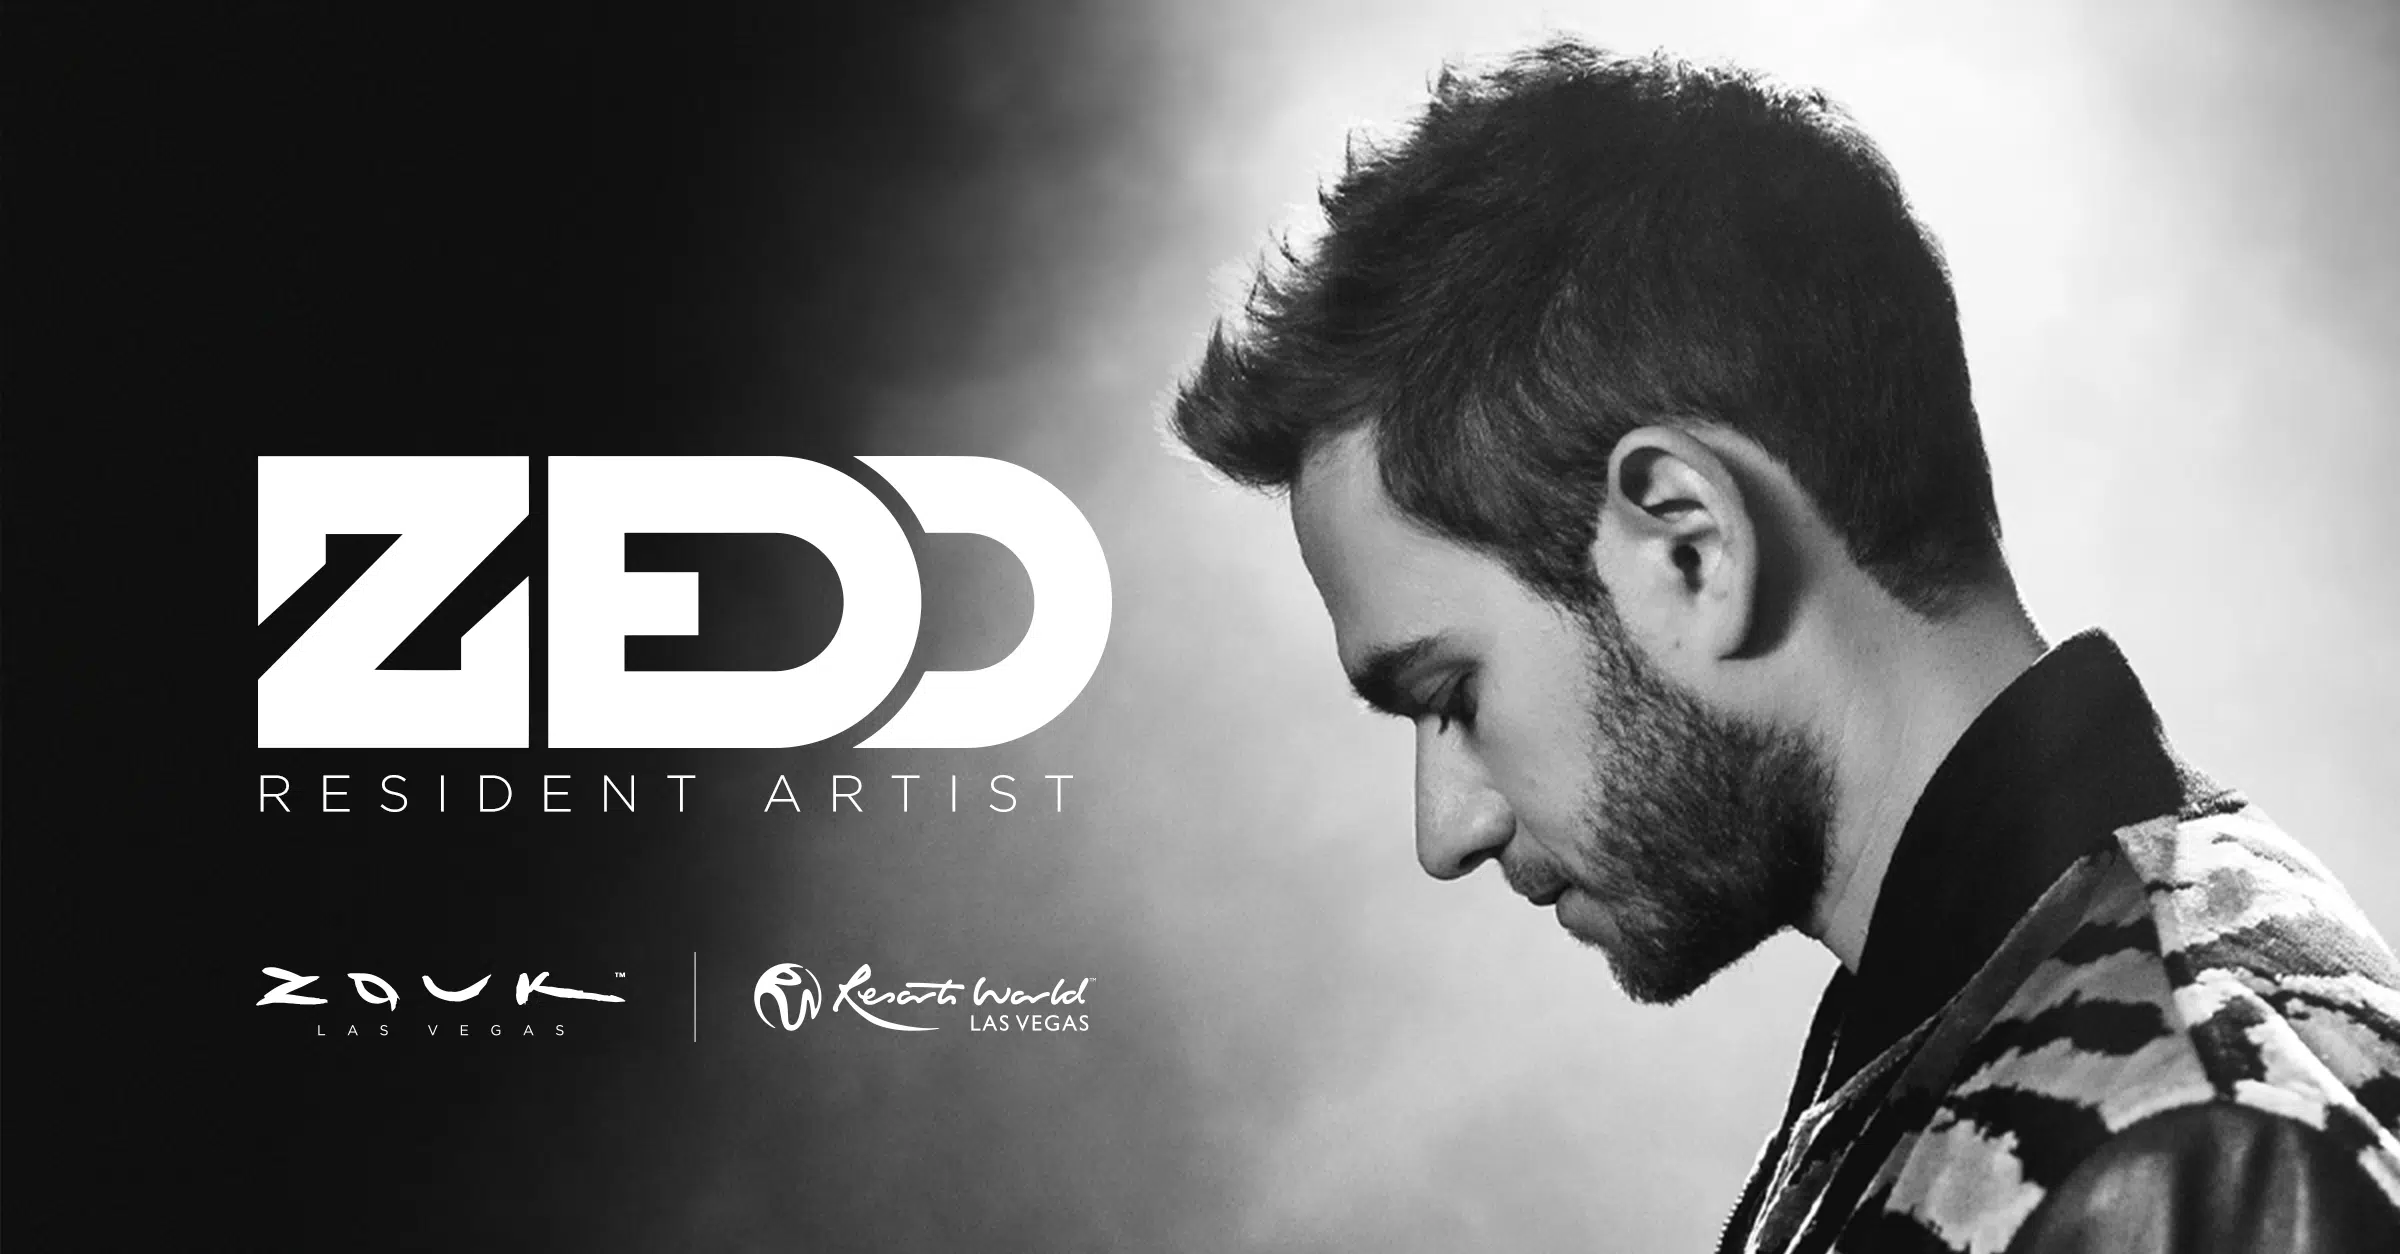 Zedd Announces New Las Vegas Residency